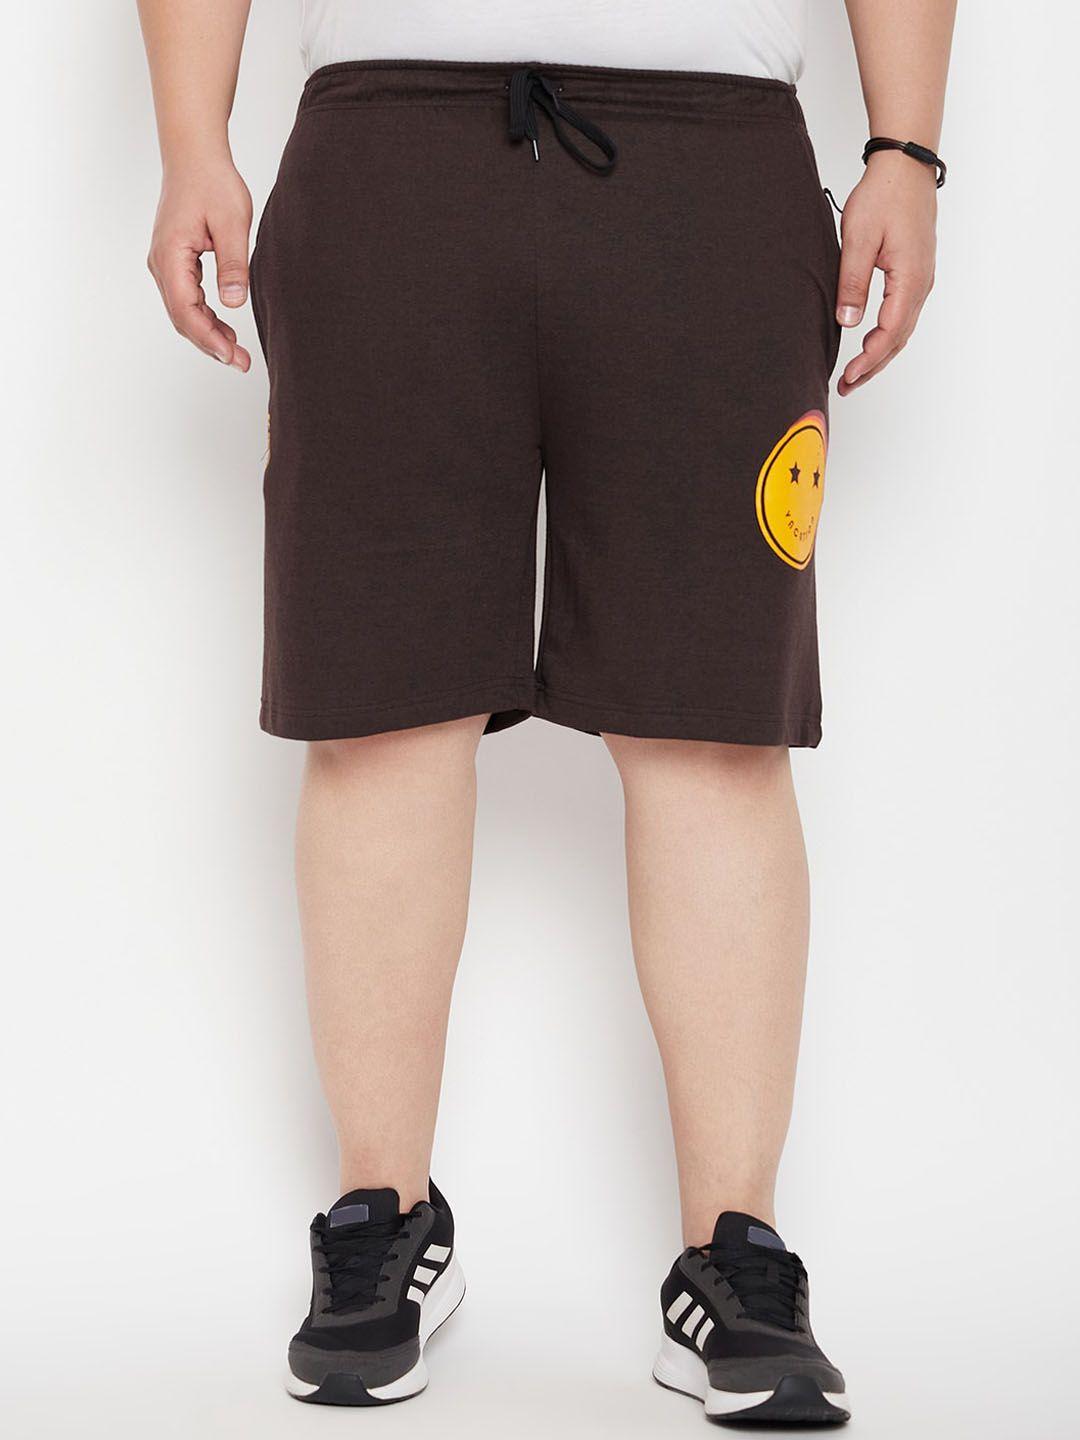 bigbanana-men-plus-size-graphic-printed-antimicrobial-technology-shorts